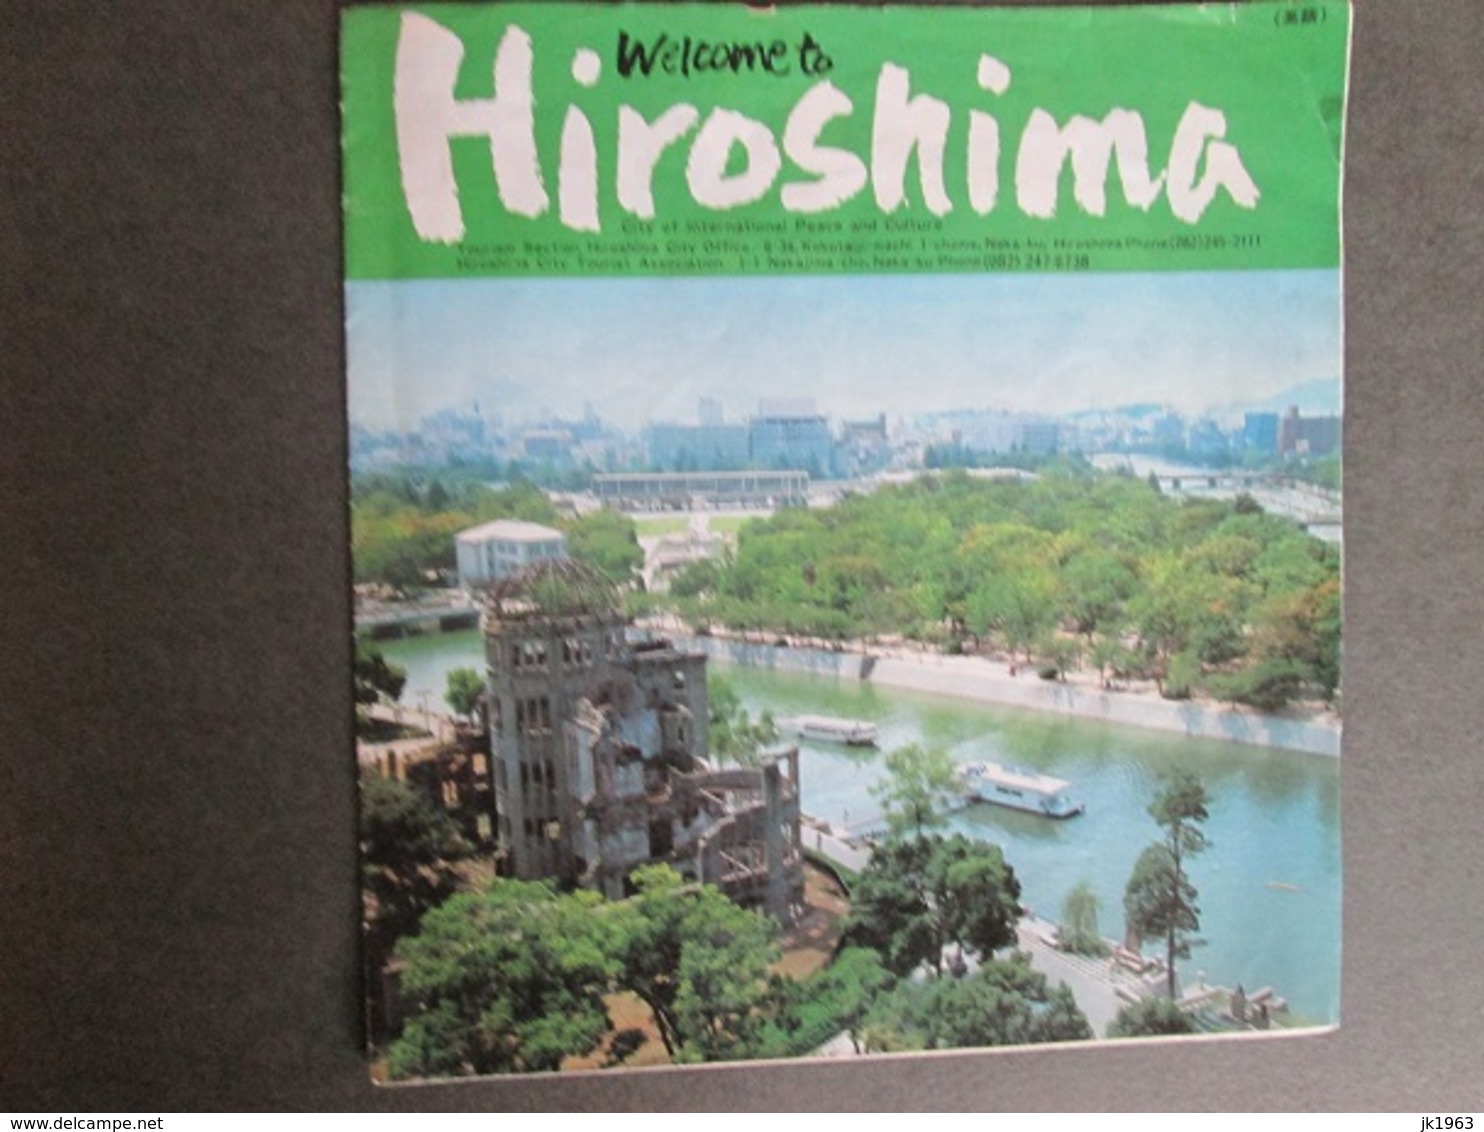 HIROSHIMA AND MIYAJIMA, POSTCARDS, MAP, TELECARD, VISITING CARD, PEACE ANIME, AND OTHER